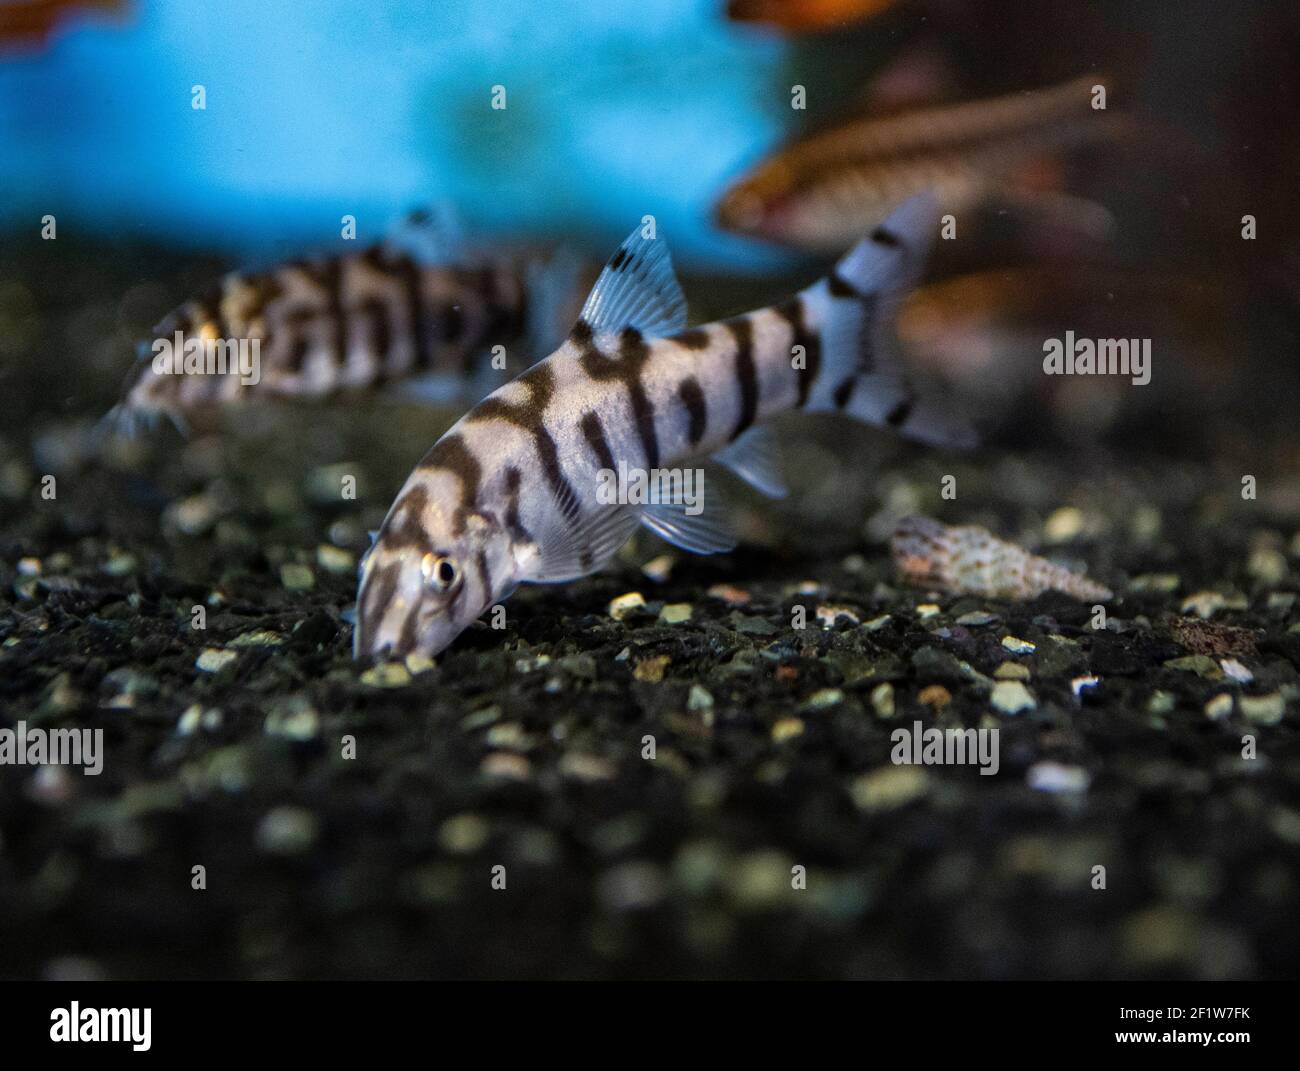 Botia almorhae (yoyo loach or Pakistani loach) in freswater aquarium Stock Photo